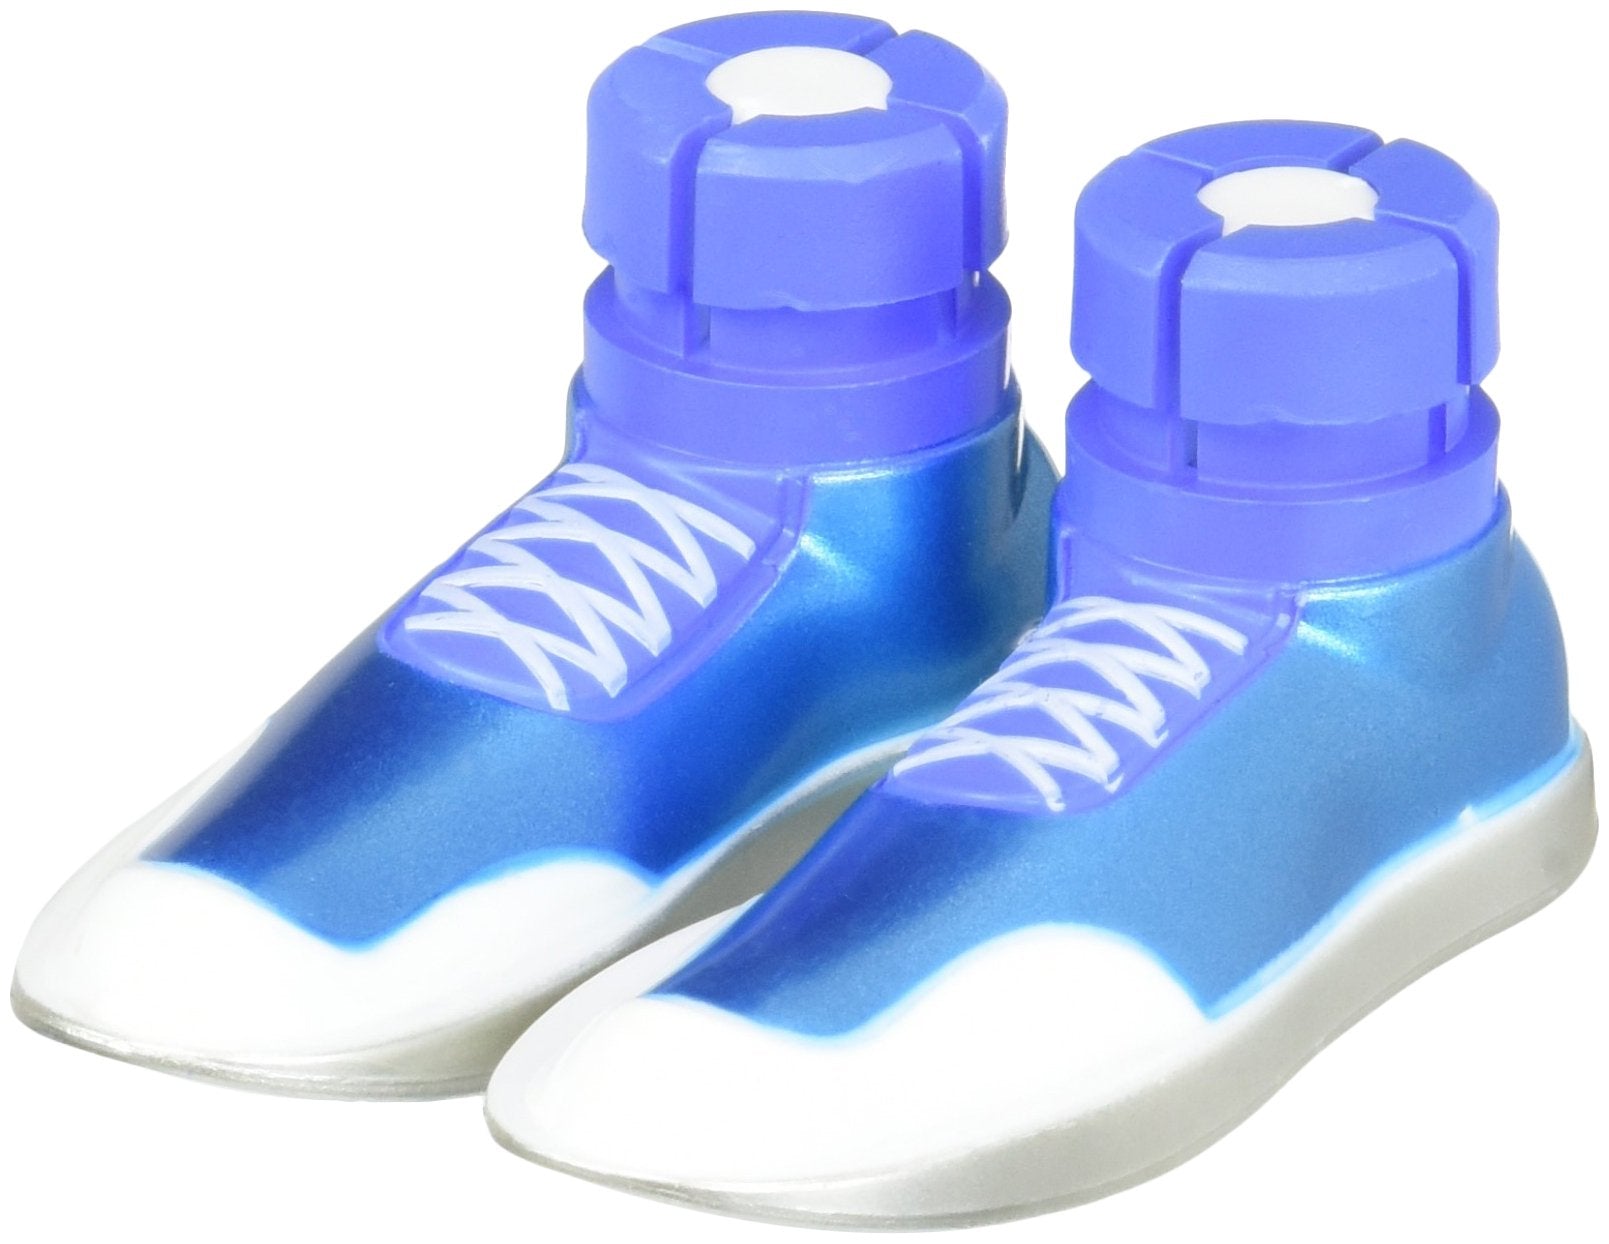 Drive Medical Rtl100014 Sneaker Walker Glides, Blue, 1 EA